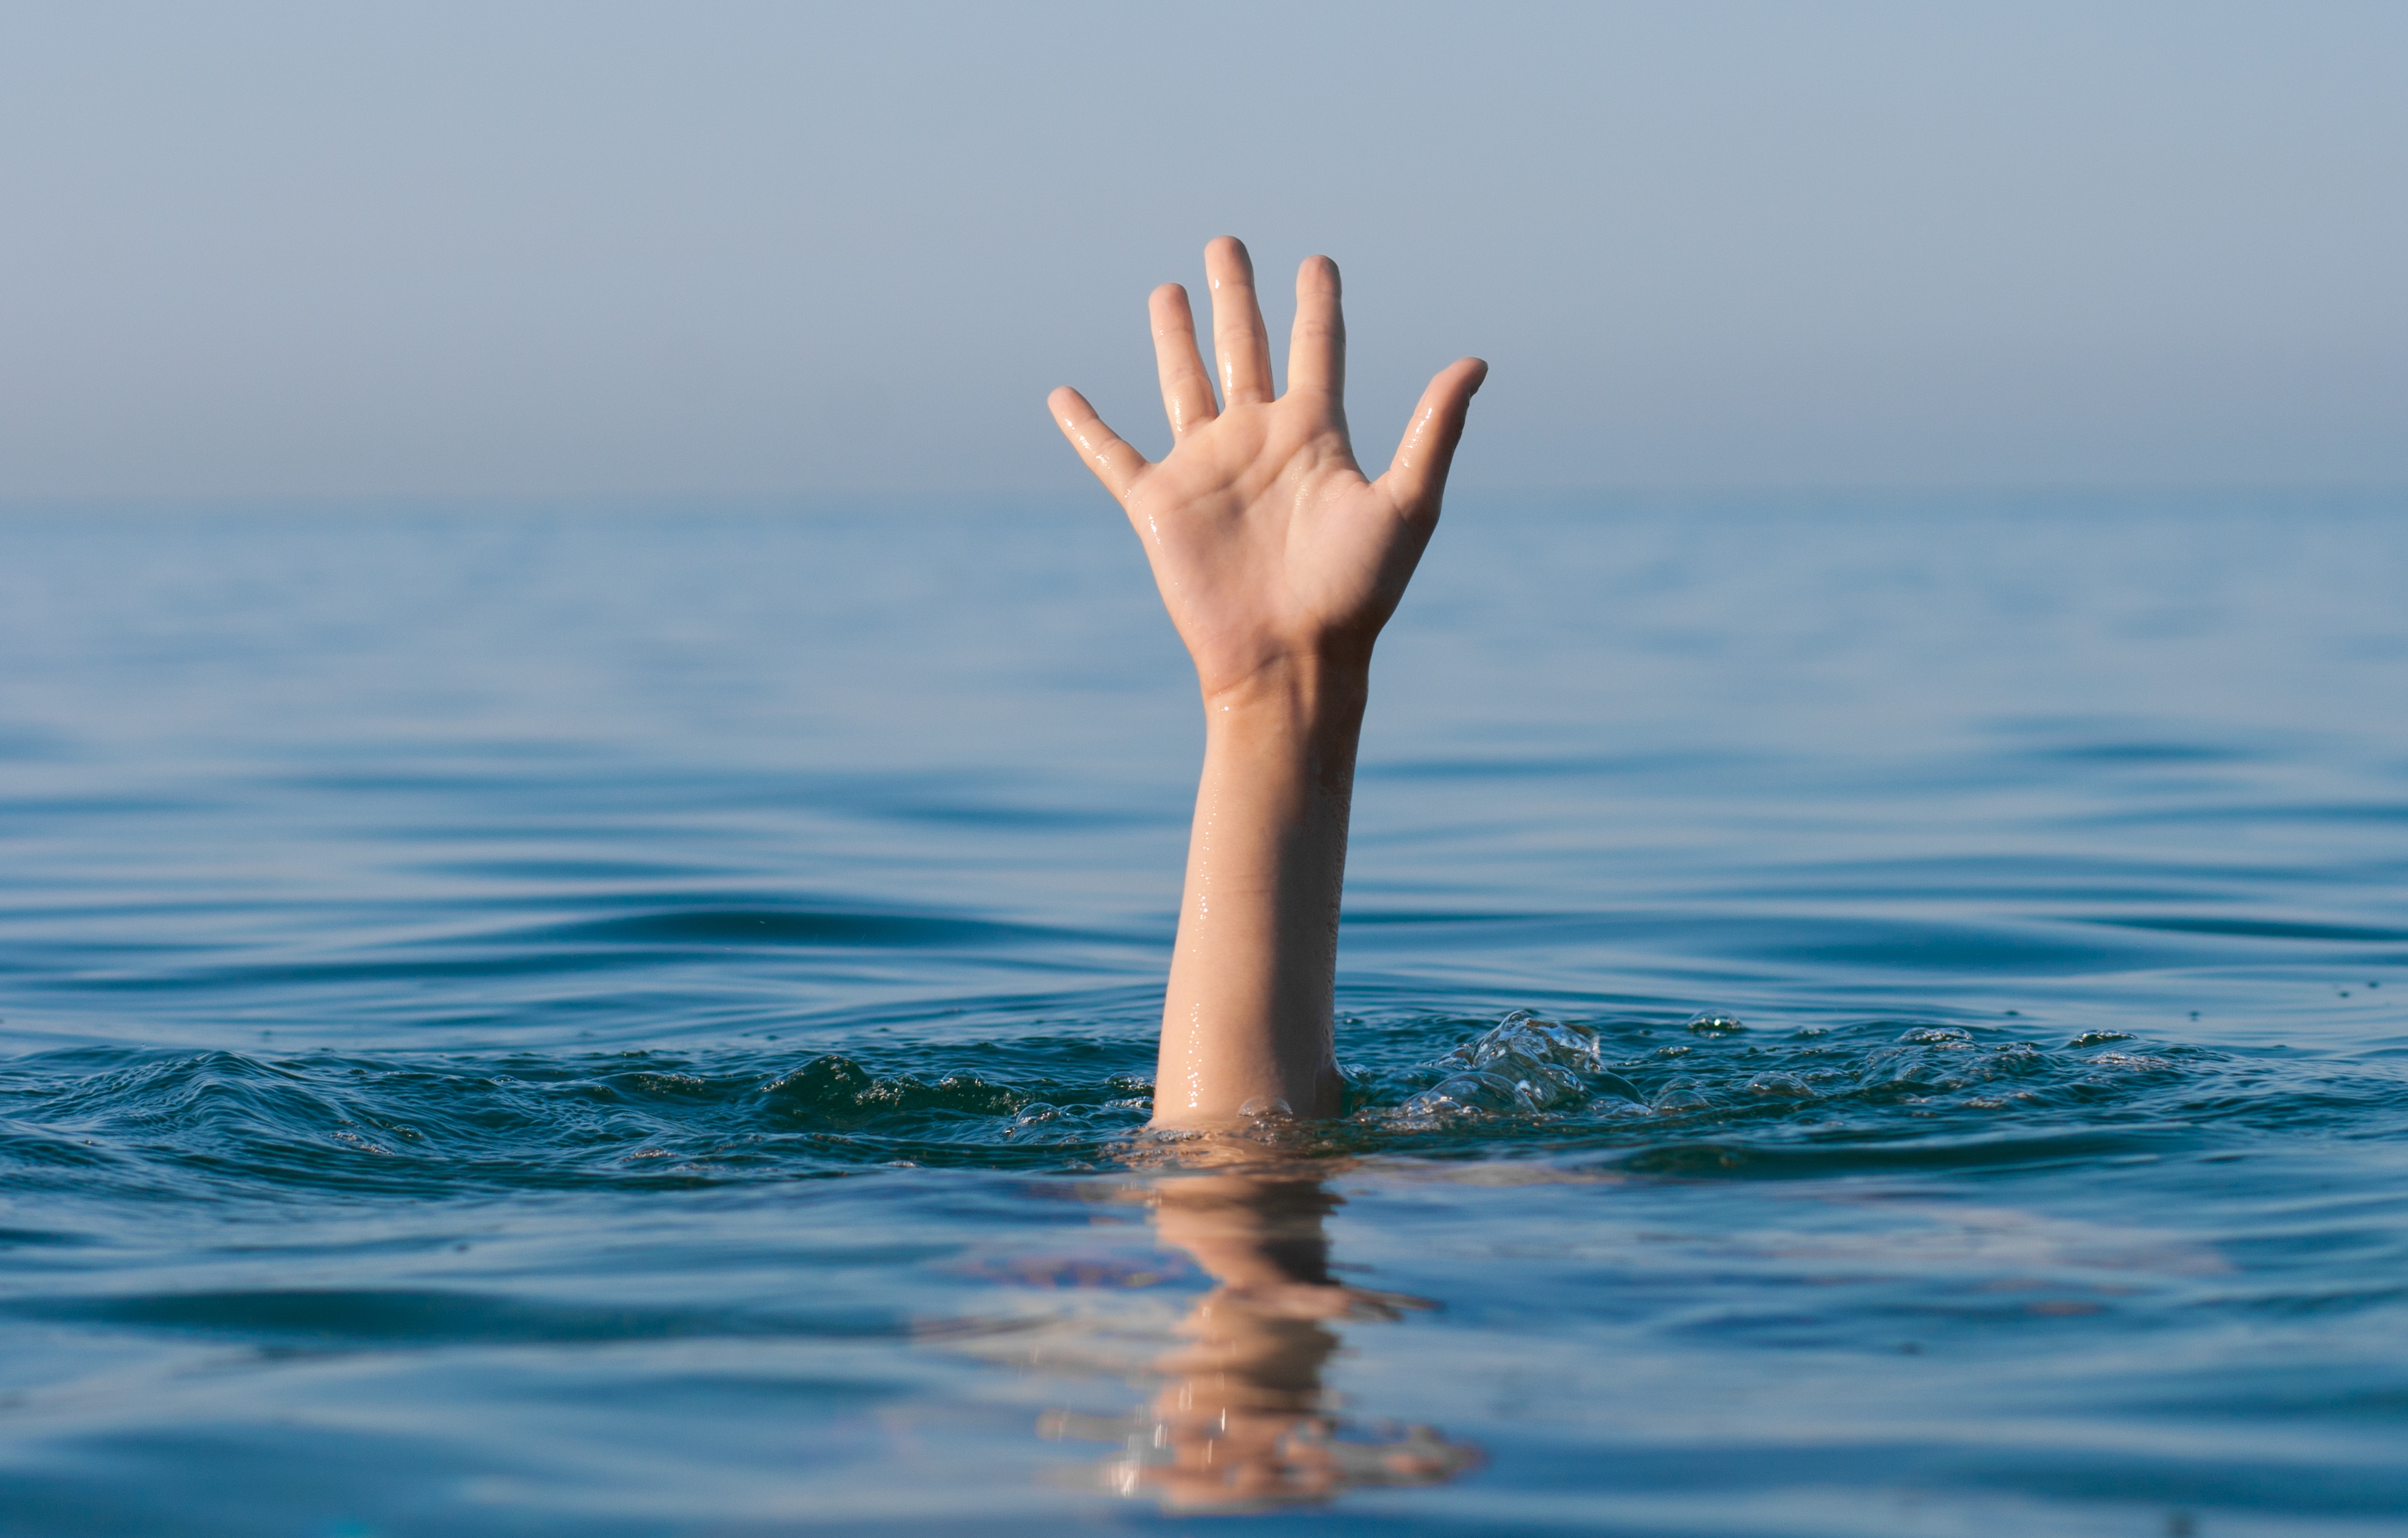 https://depositphotos.com/5312864/stock-photo-single-hand-of-drowning-man.html